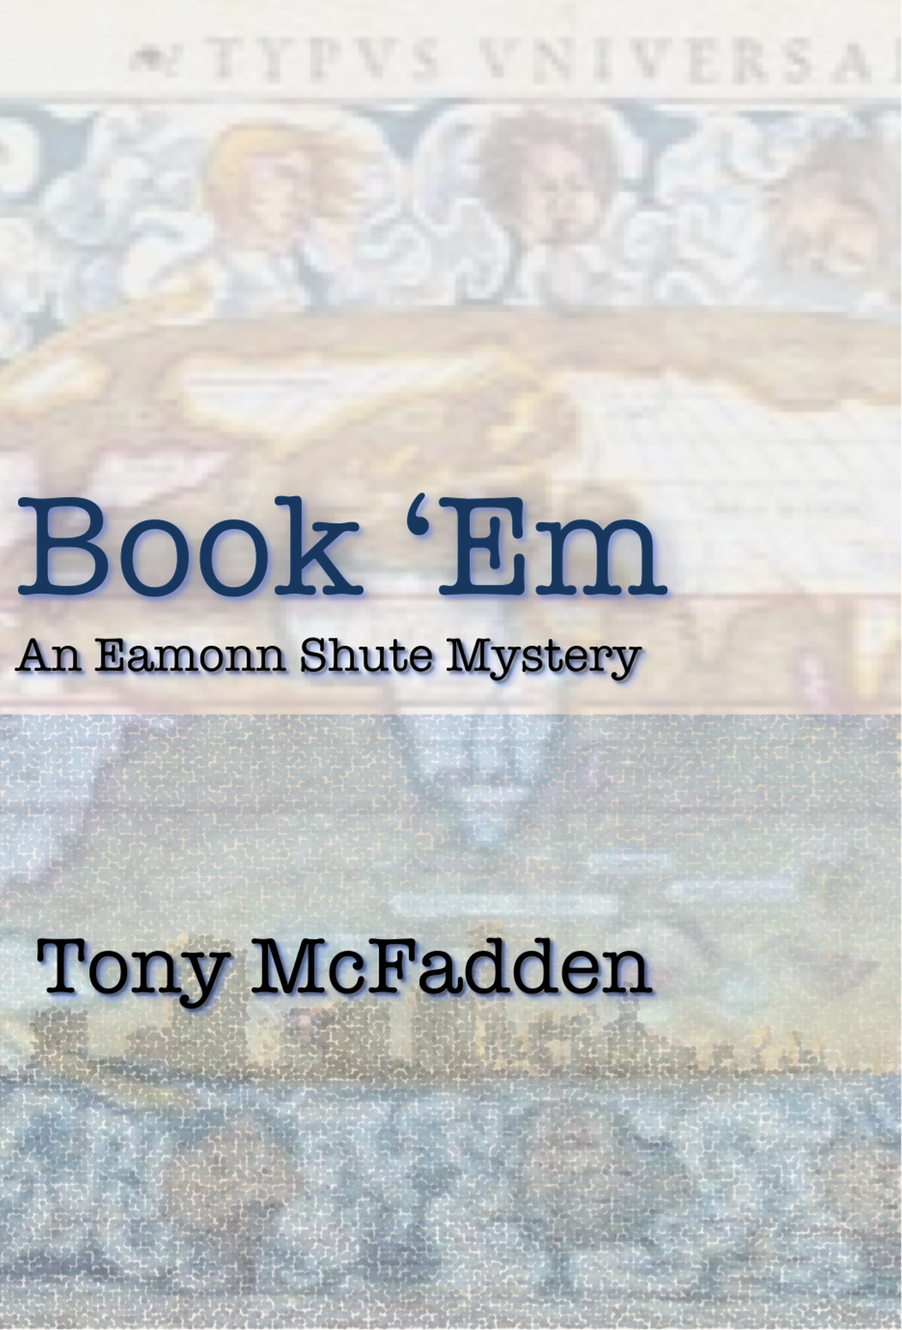 Book 'Em - An Eamonn Shute Mystery